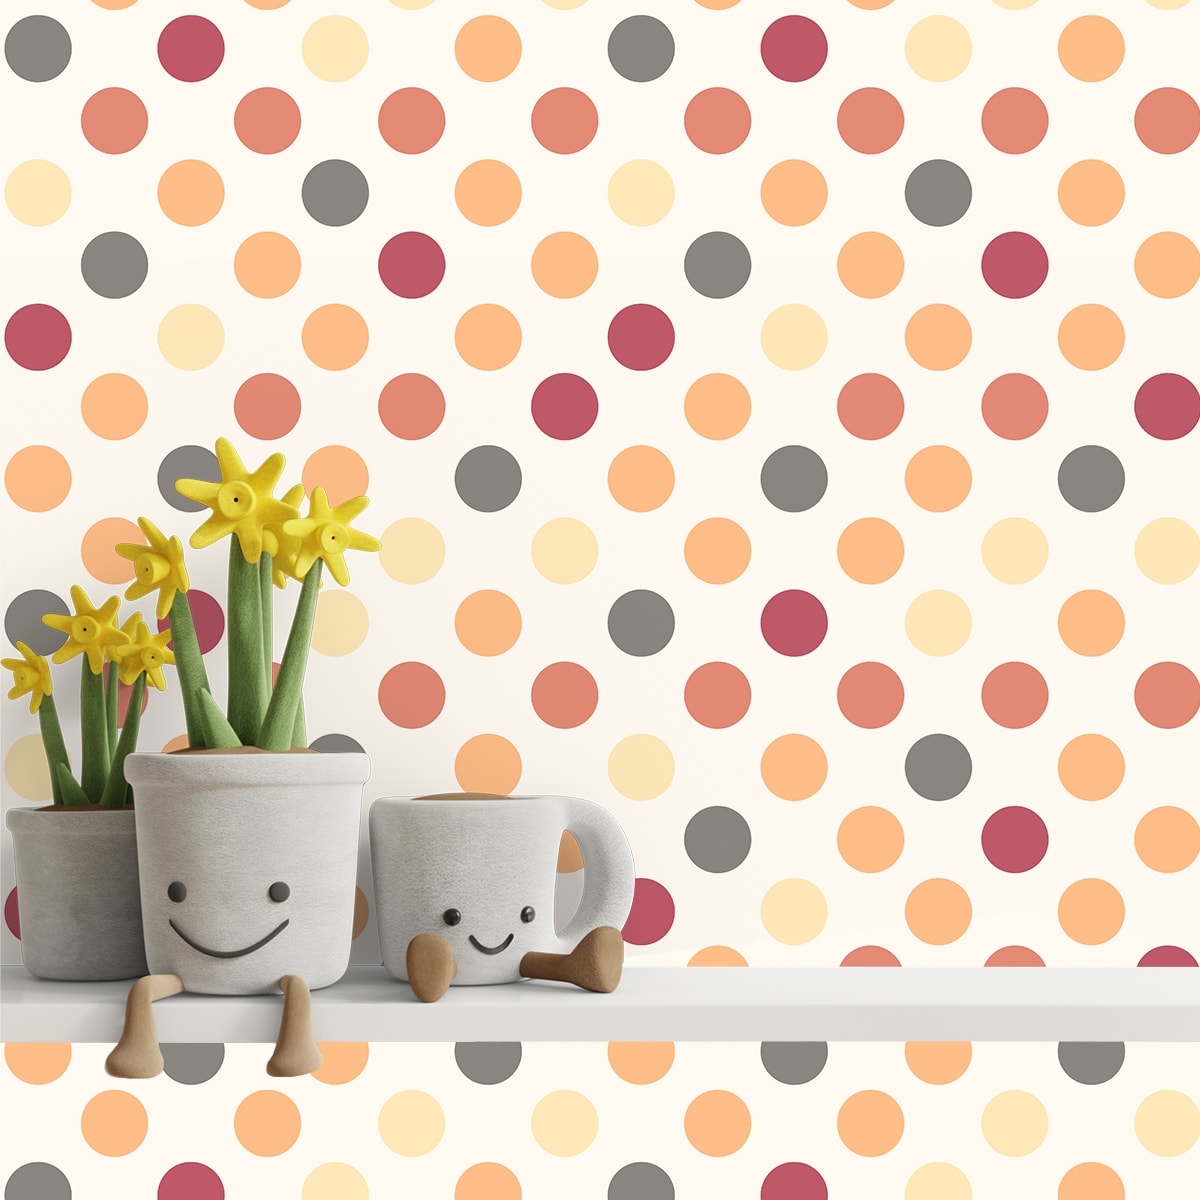 Multicolor Polka Dots in Random Order, Kids Wallpaper Design